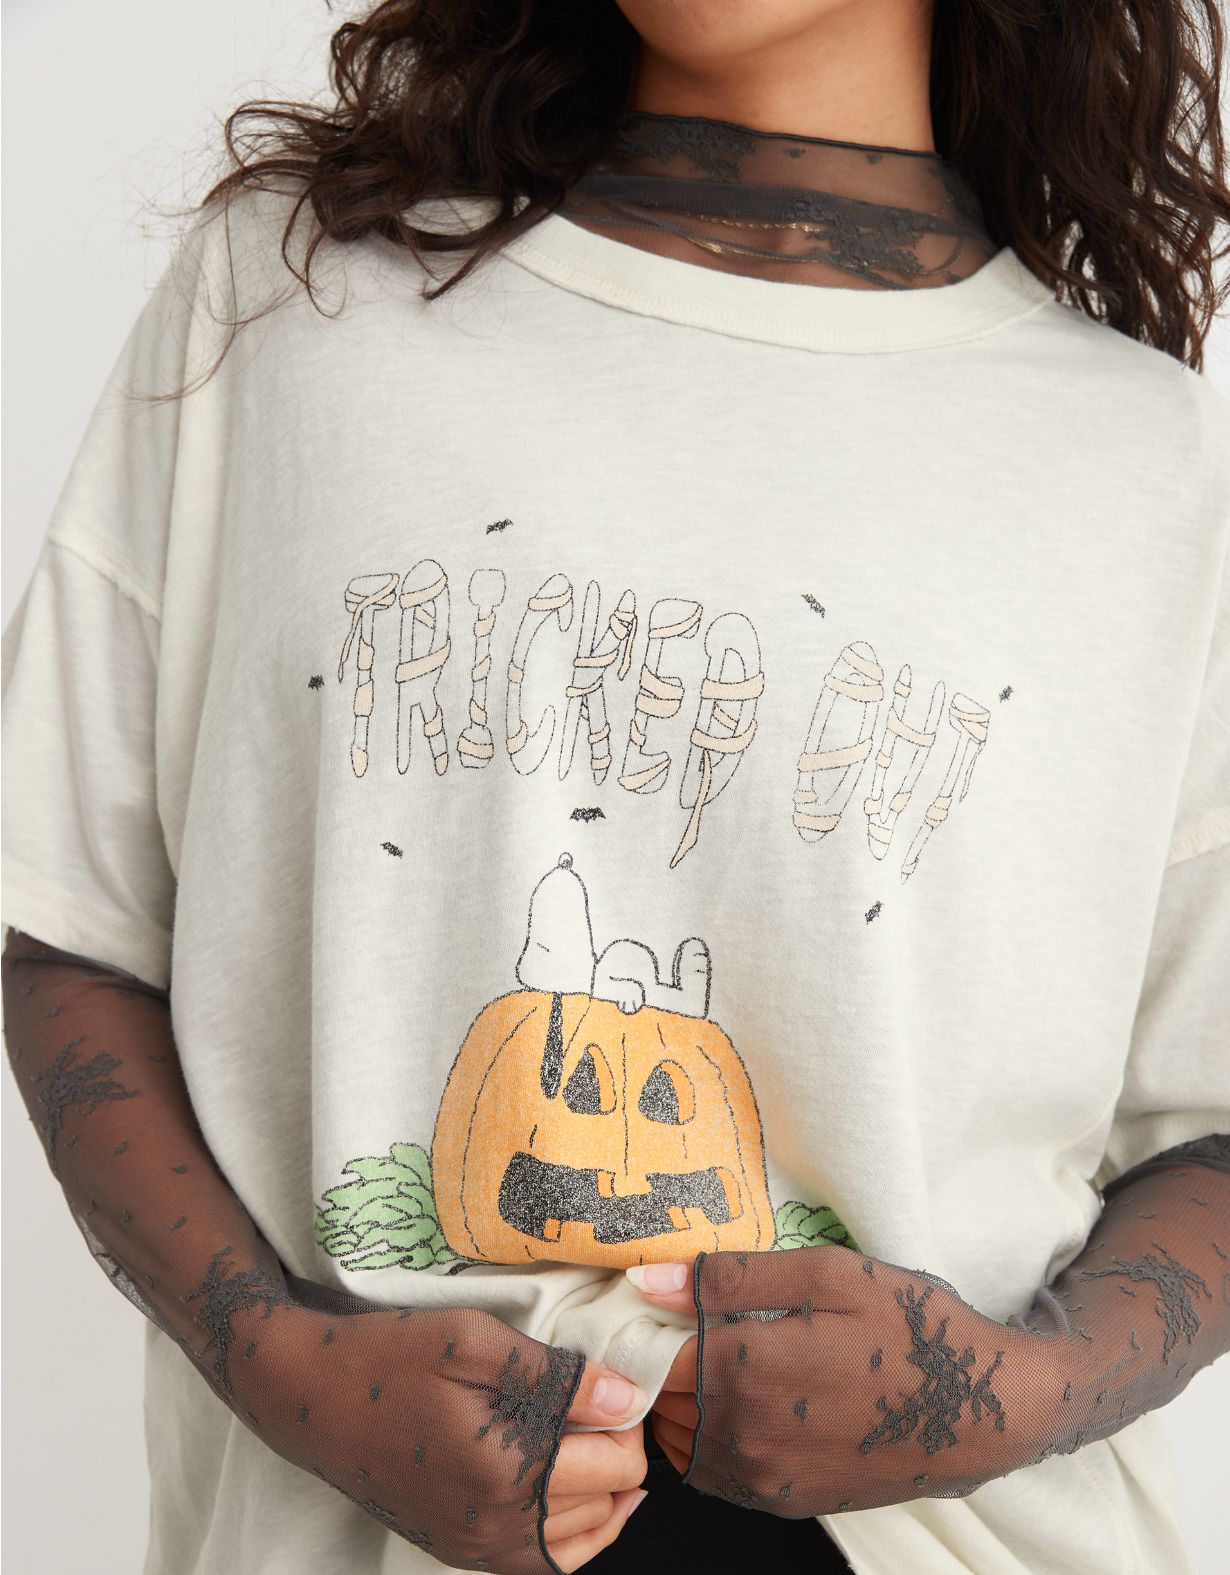 Aerie Crewneck Snoopy Graphic Oversized Boyfriend T-Shirt